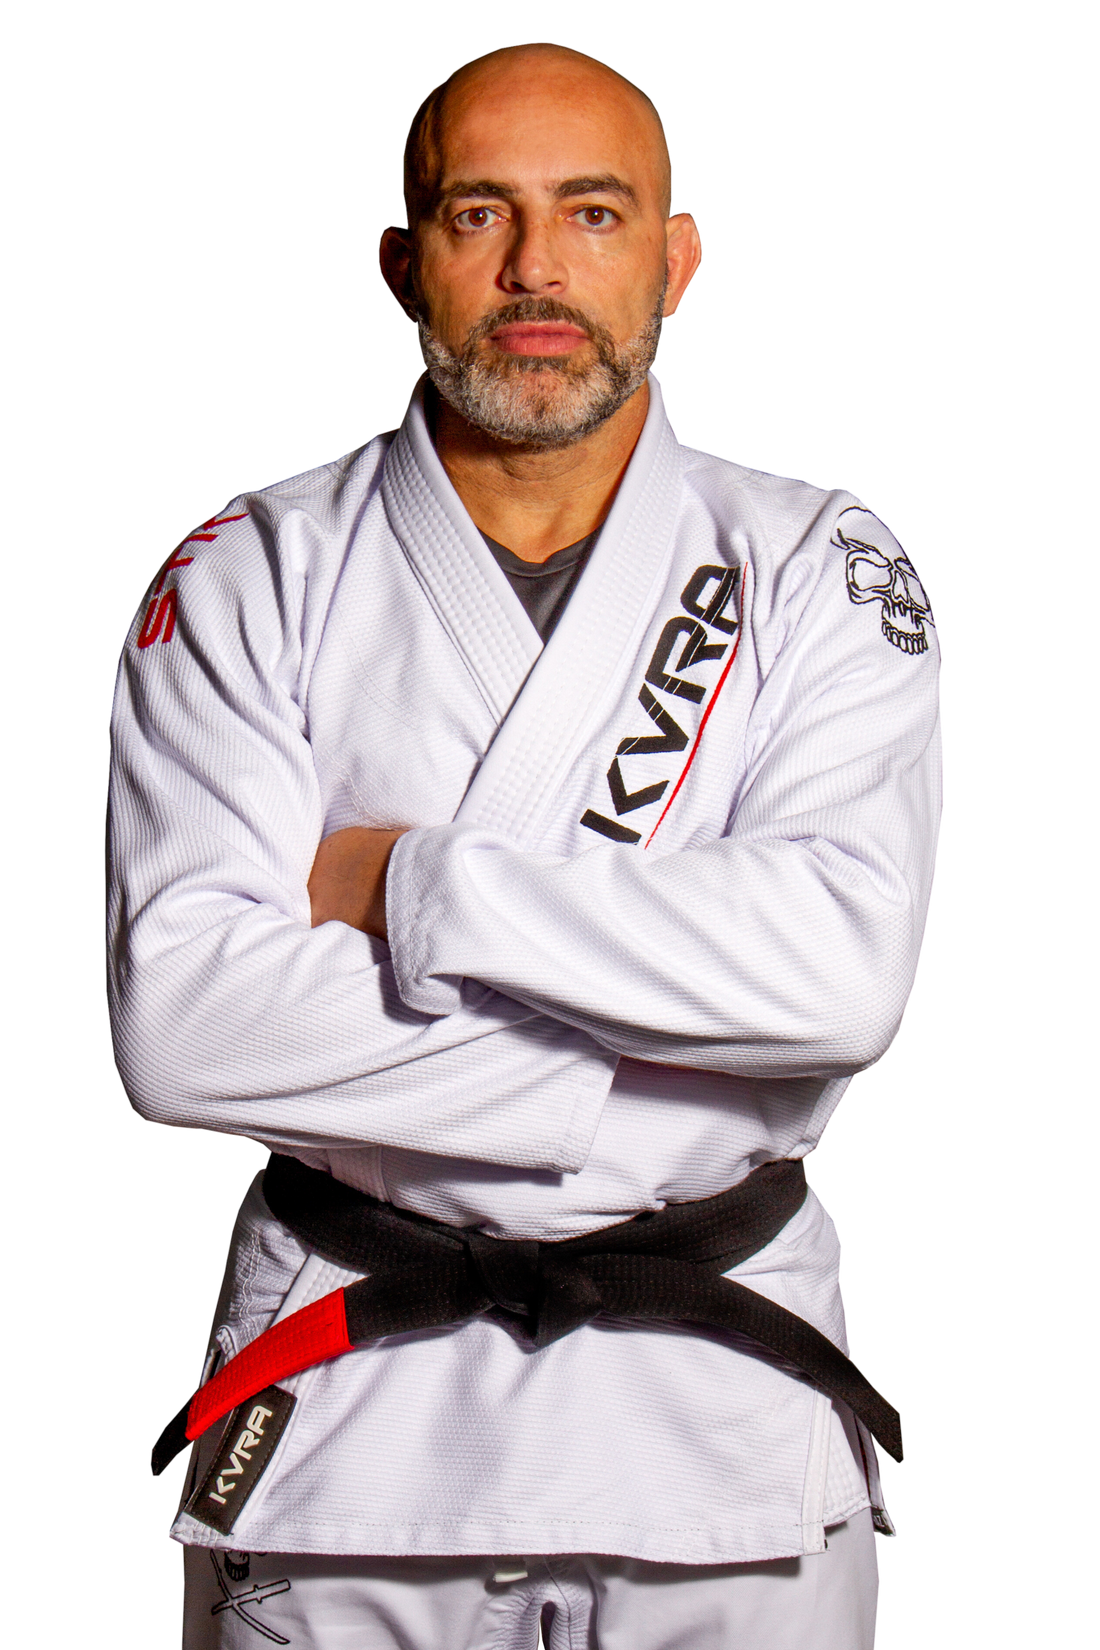 Mission 22 - Warrior Way Martial Arts, Brazilian Jiu-Jitsu